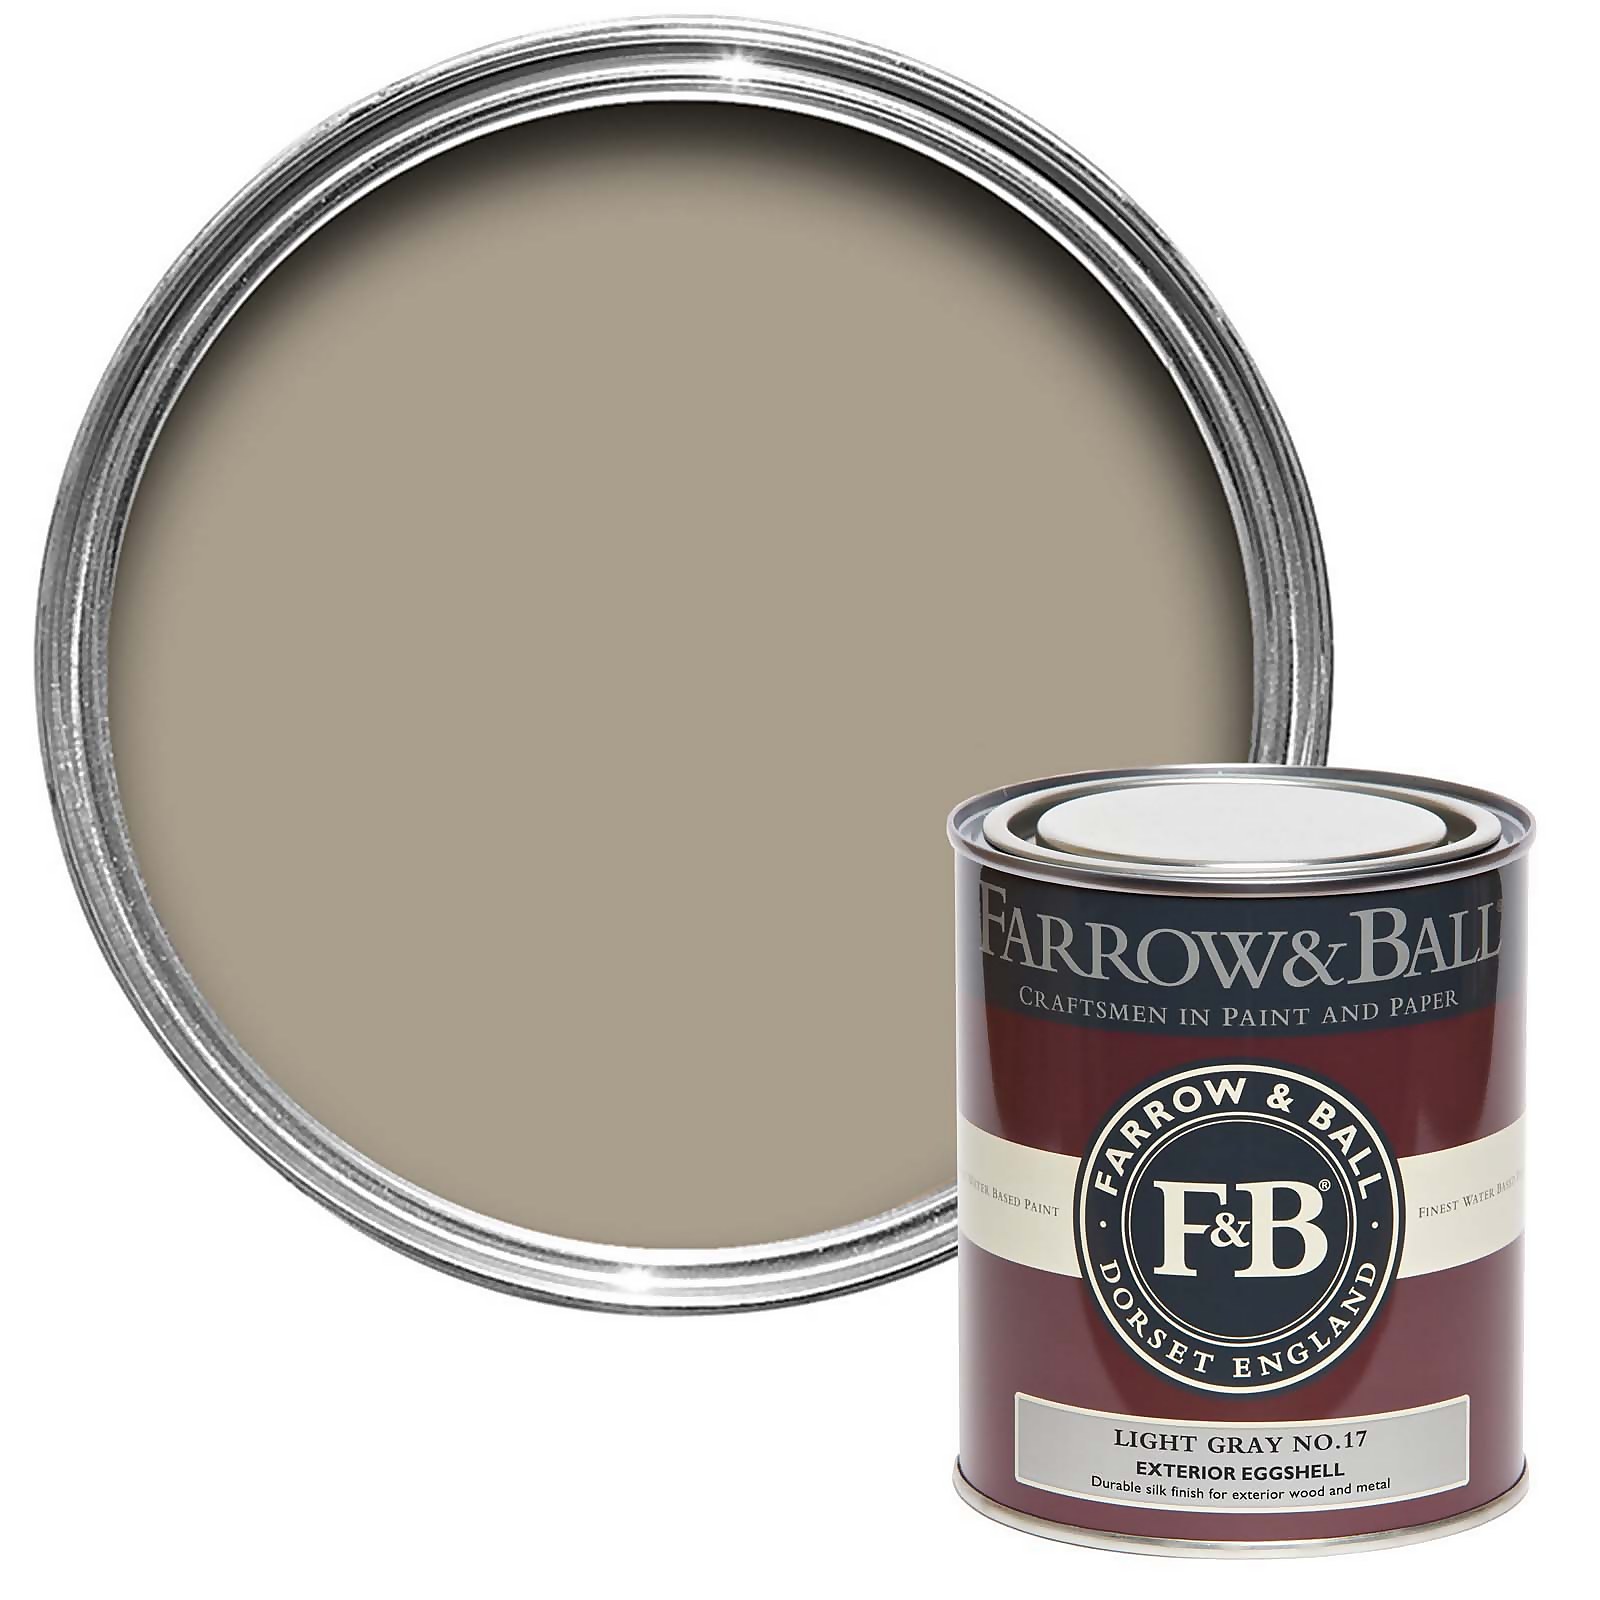 Farrow & Ball Exterior Eggshell Paint Light Gray No.22 - 750ml